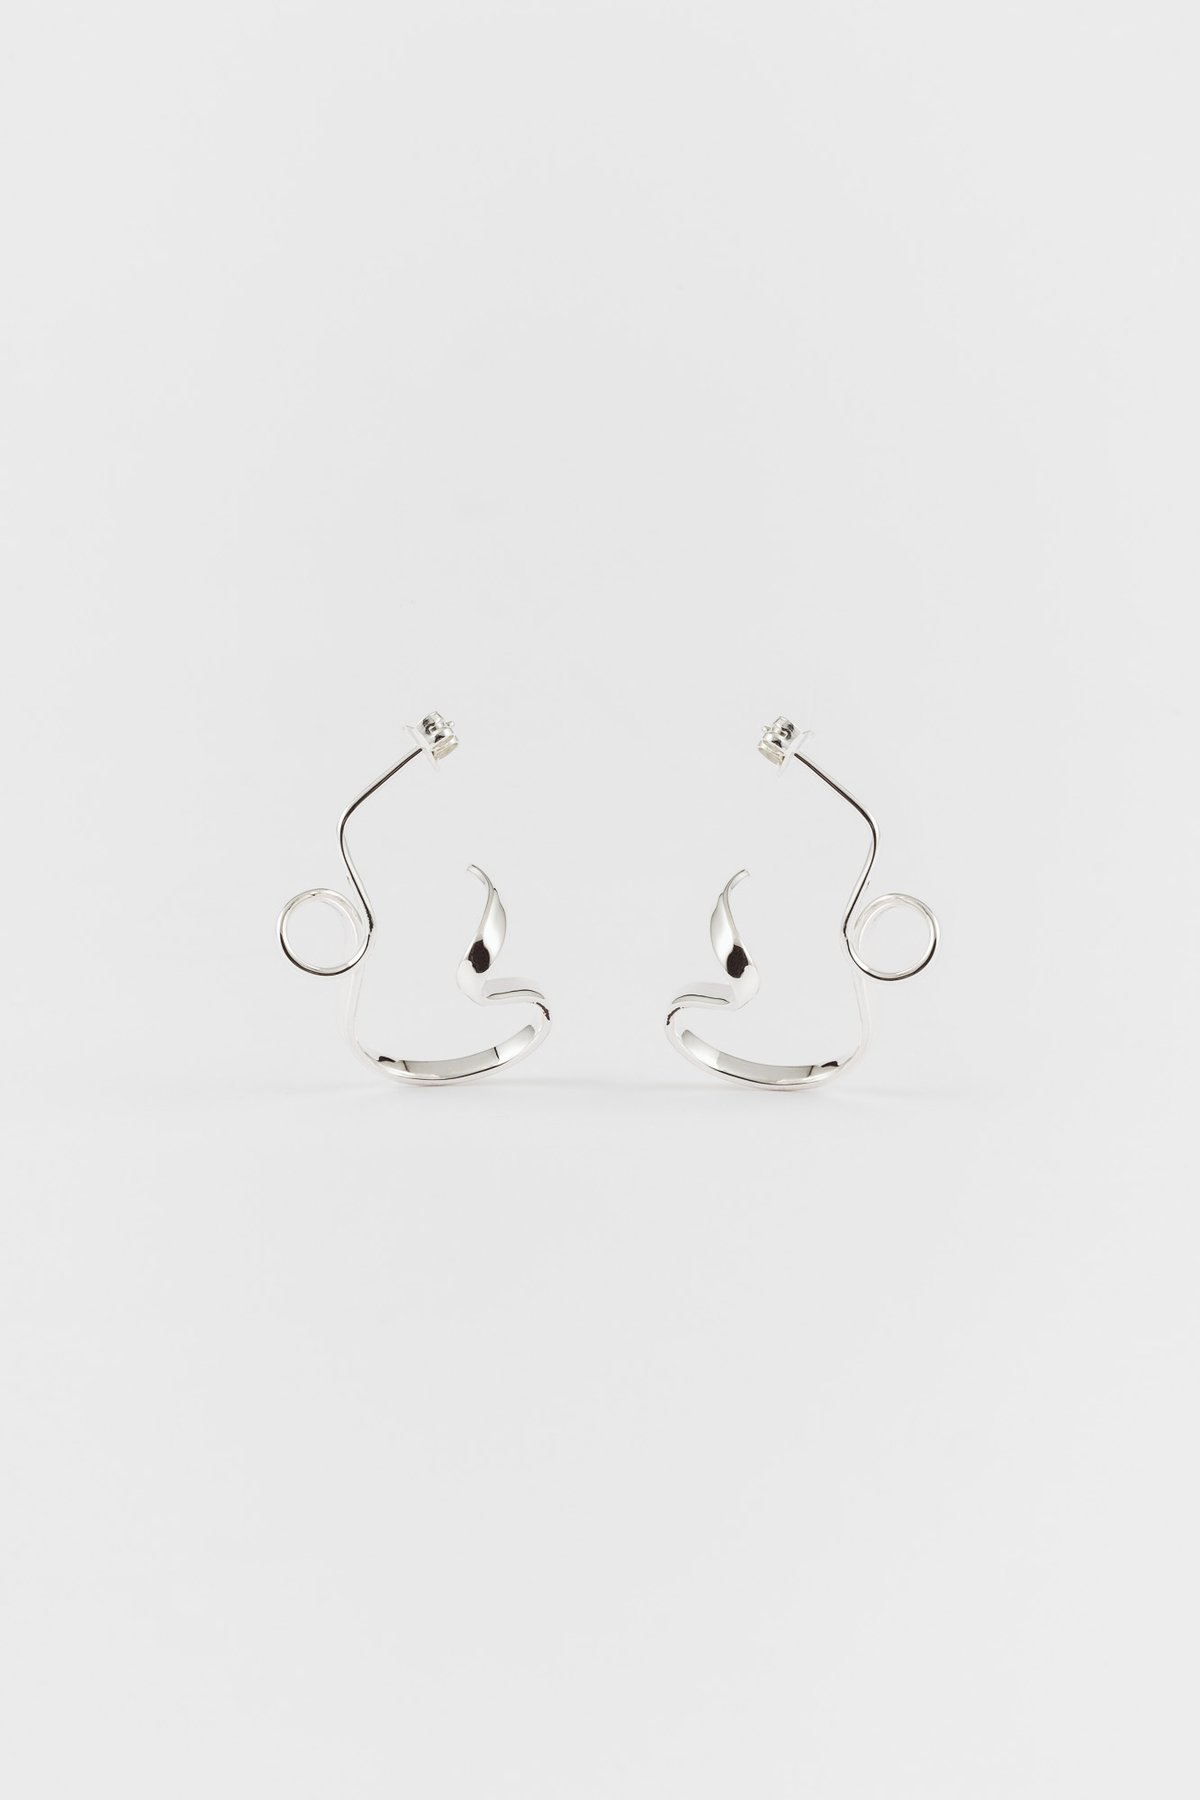 Image of ampersand earrings